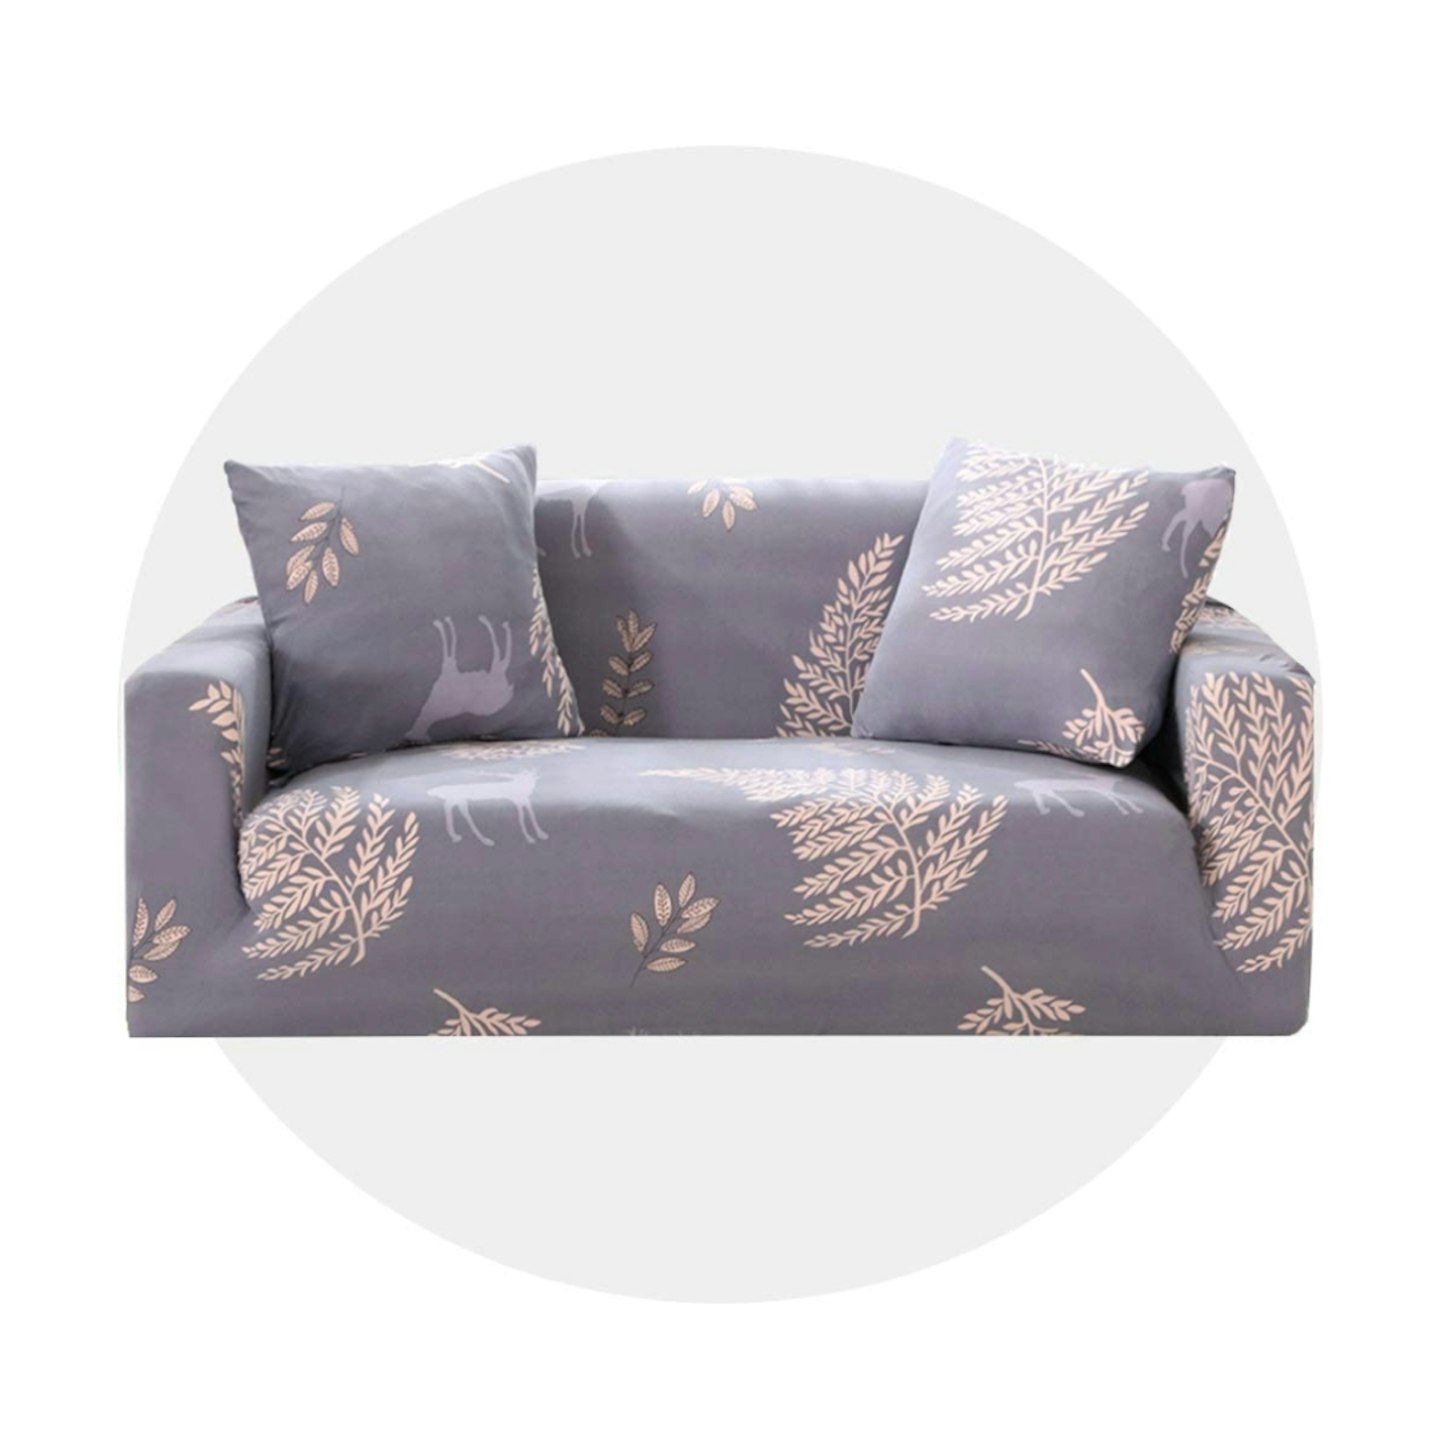 Carvapet Sofa Covers